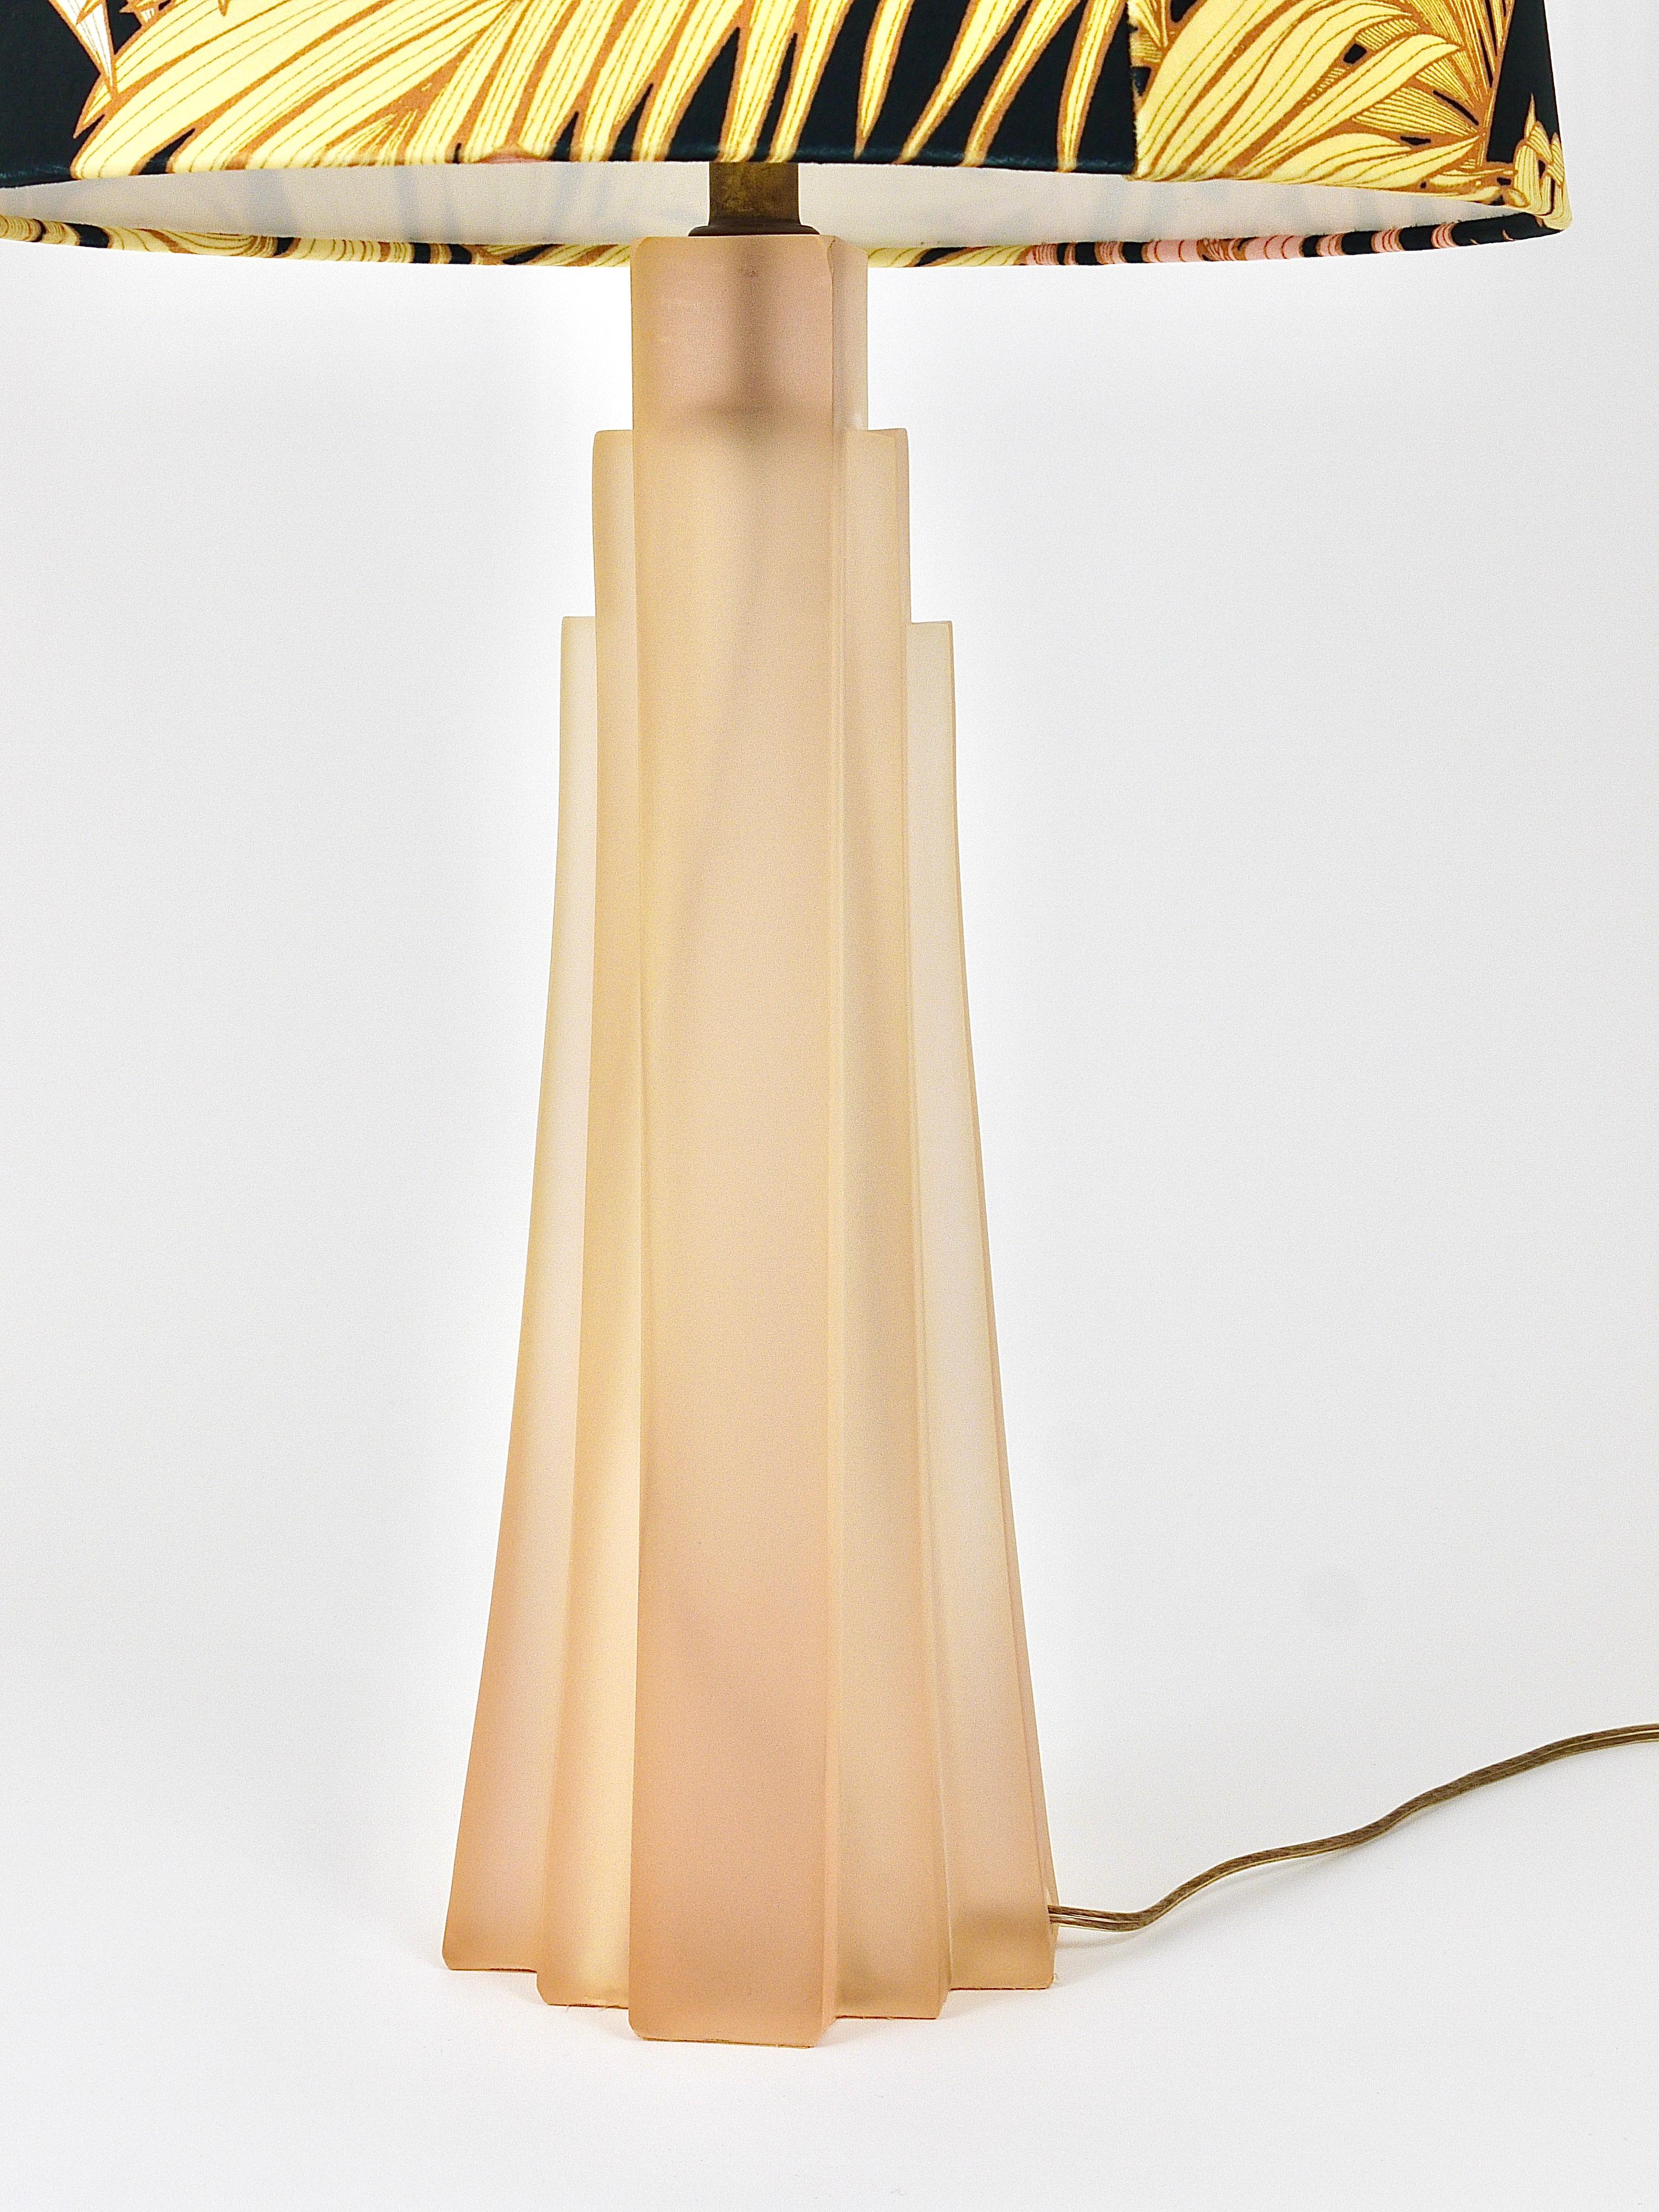 Paolo Gucci Art Deco Skyscraper Table Lamp, Lucite, Brass, Velvet, Italy, 1980s For Sale 15